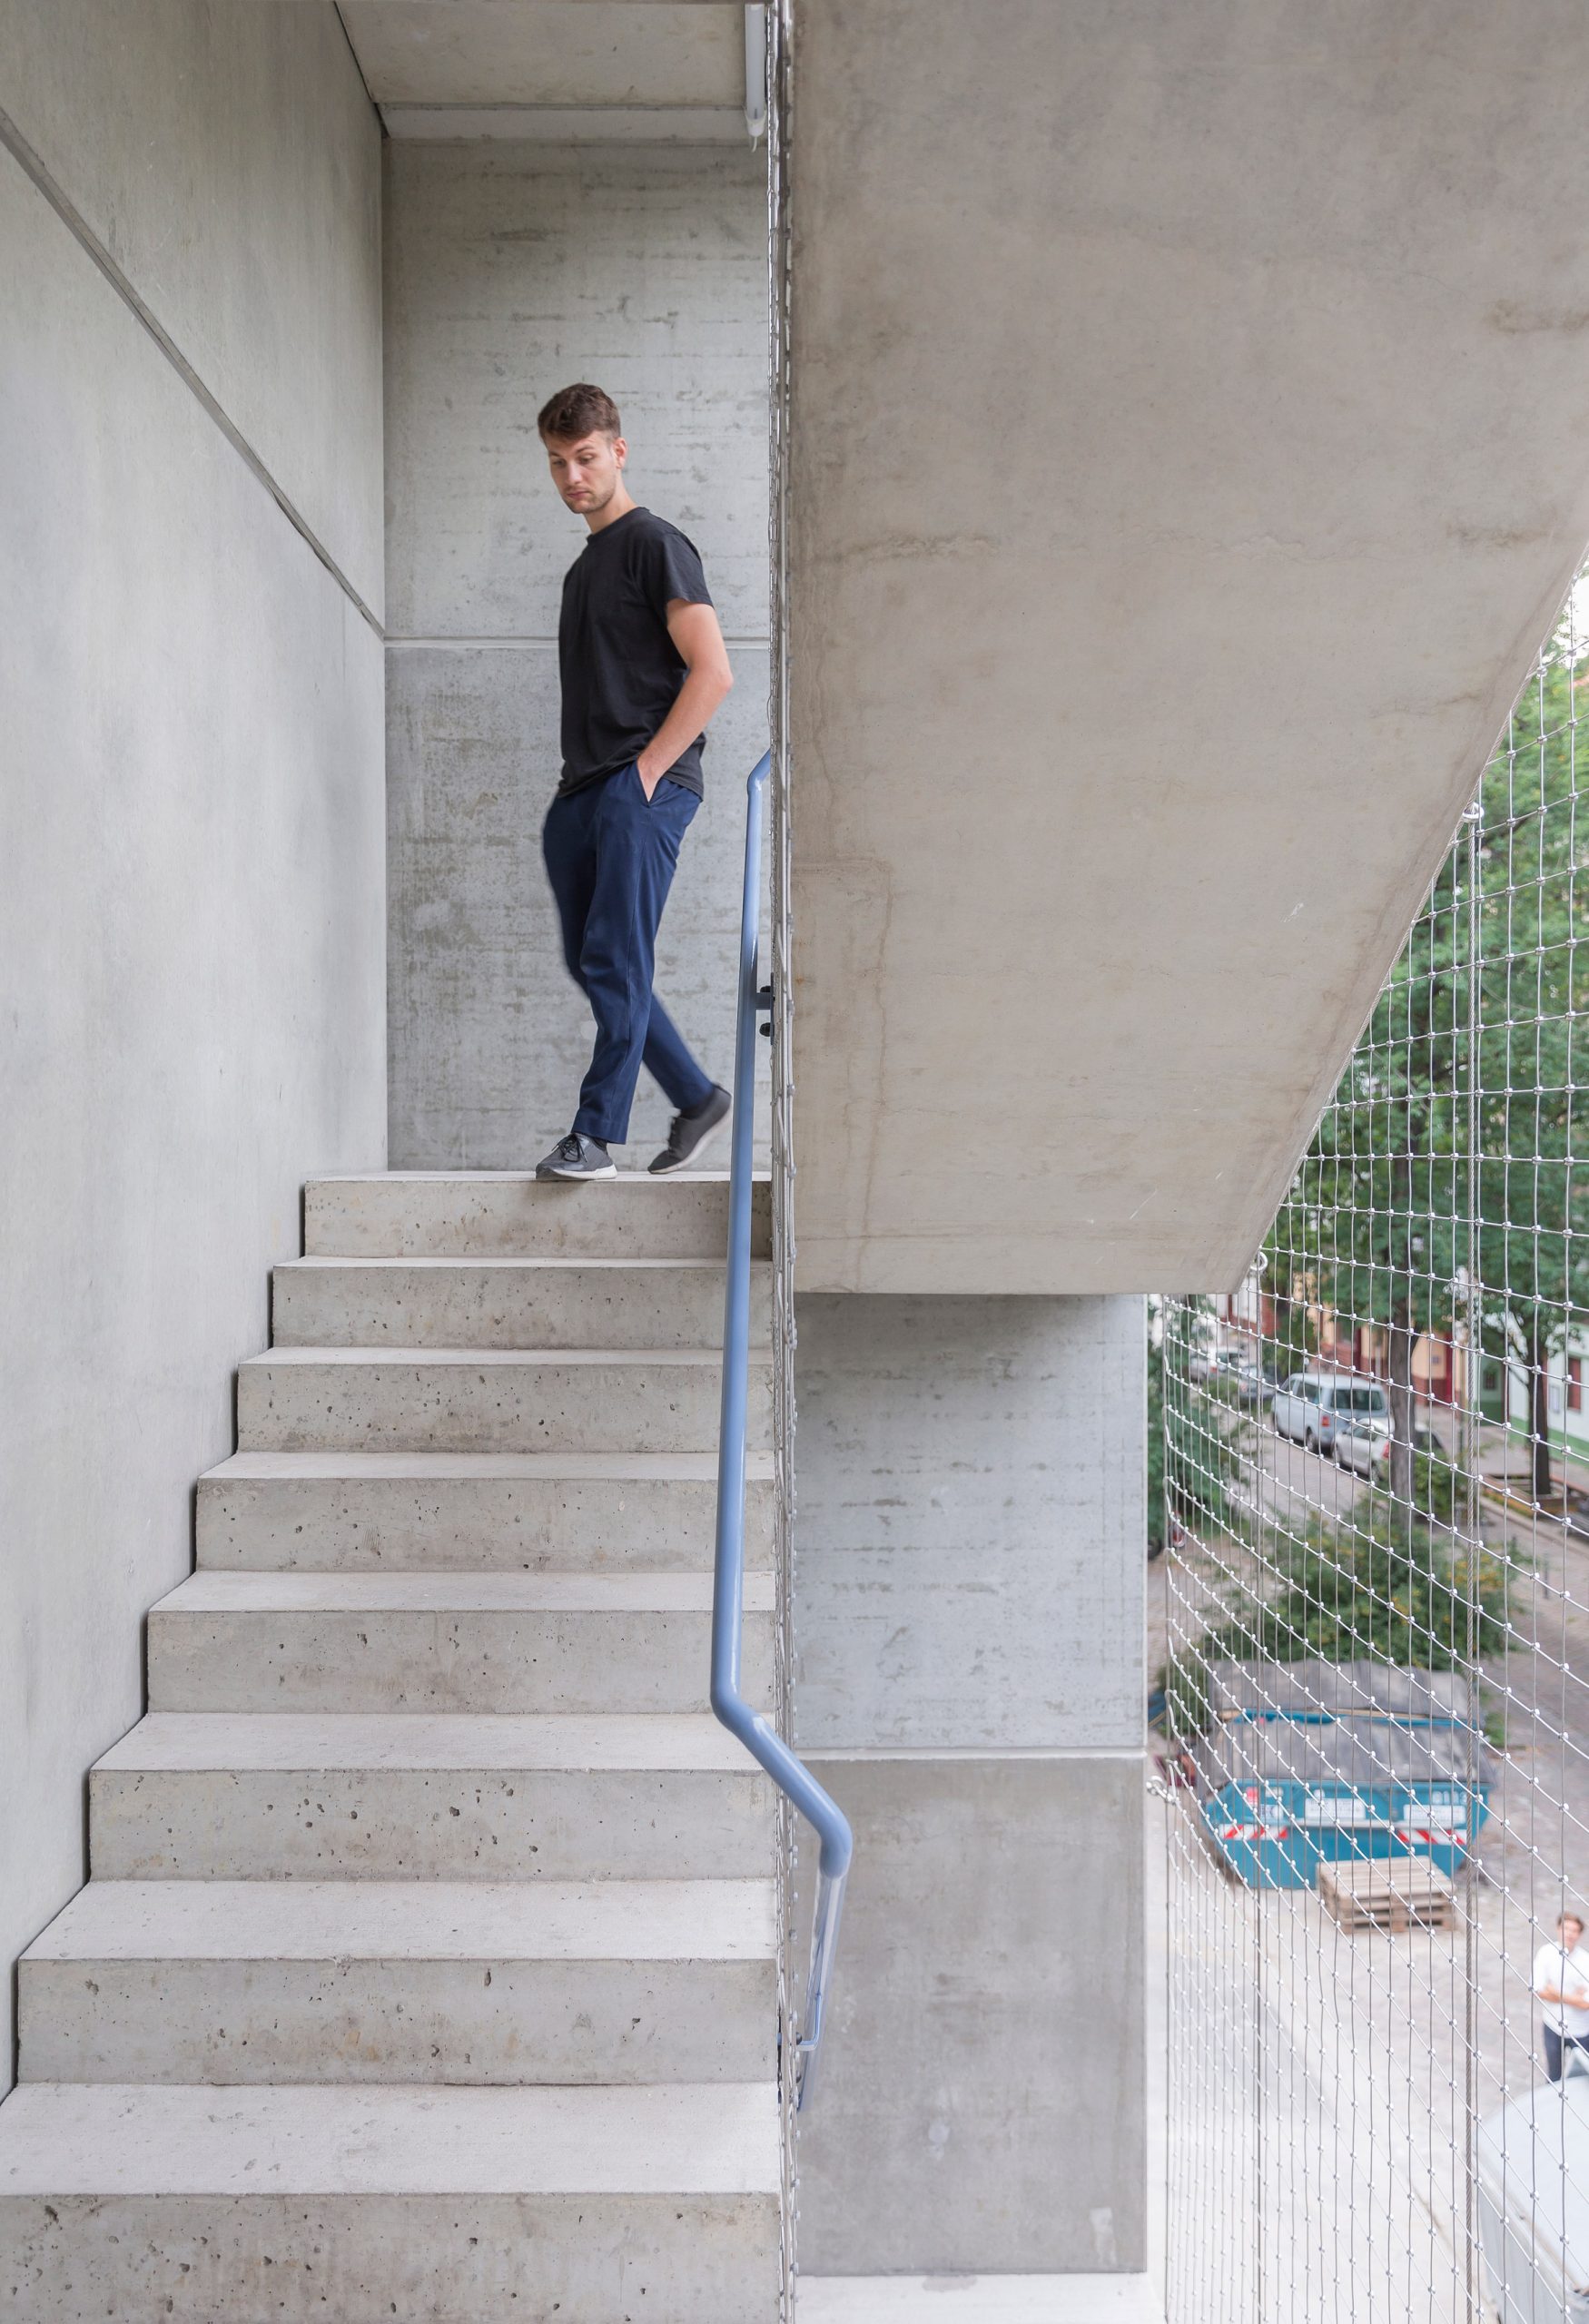 Precast concrete of Wohnregal, a prefabricated housing block by FAR in Berlin, Germany